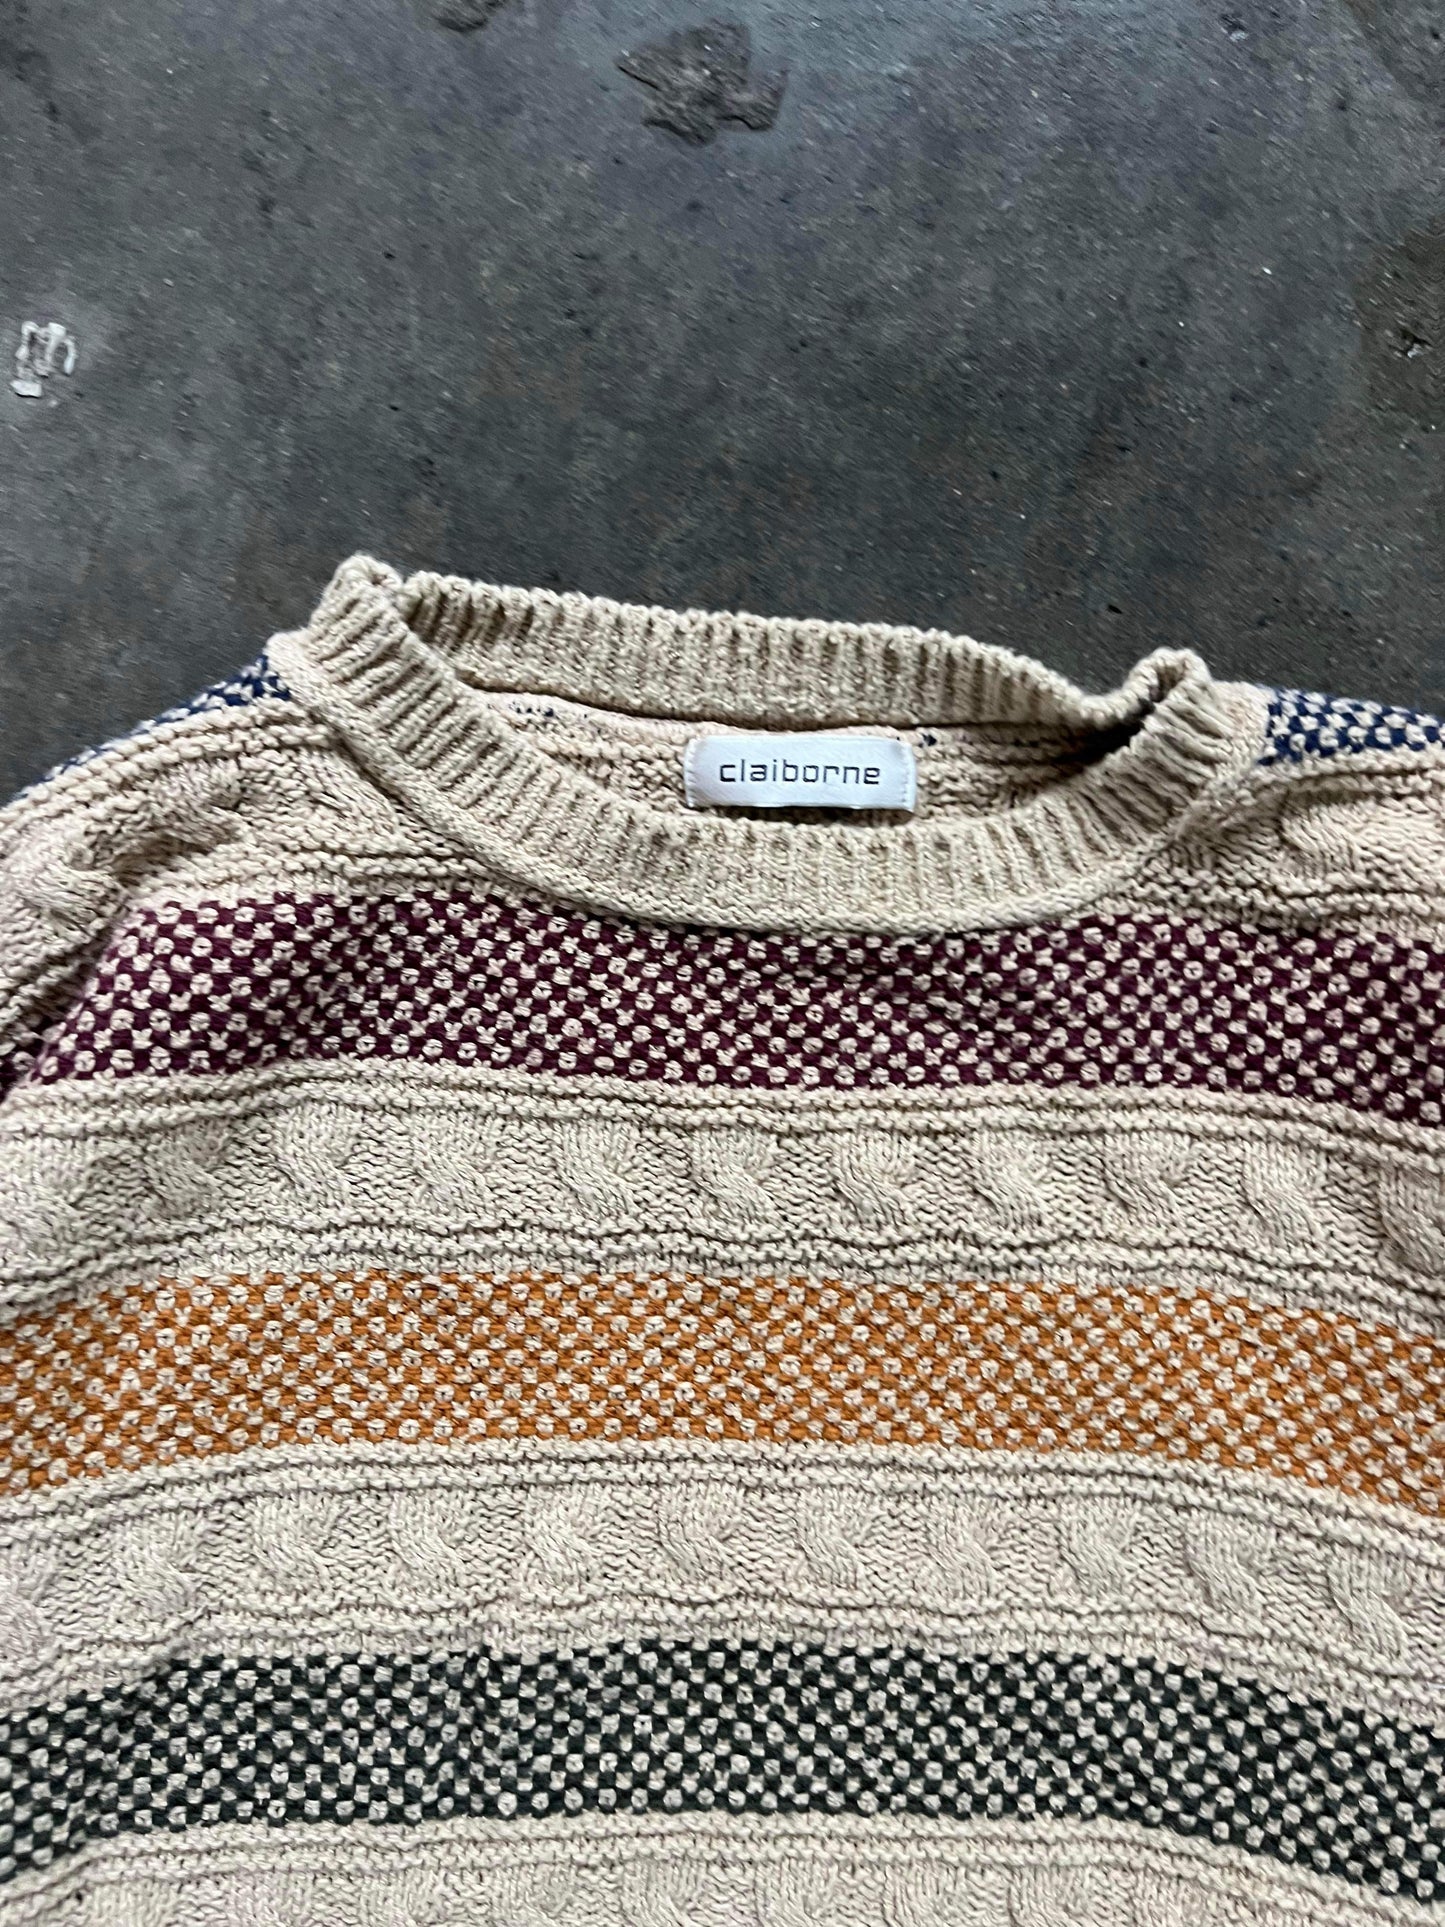 (M) Vintage Textured Multi Color Knit